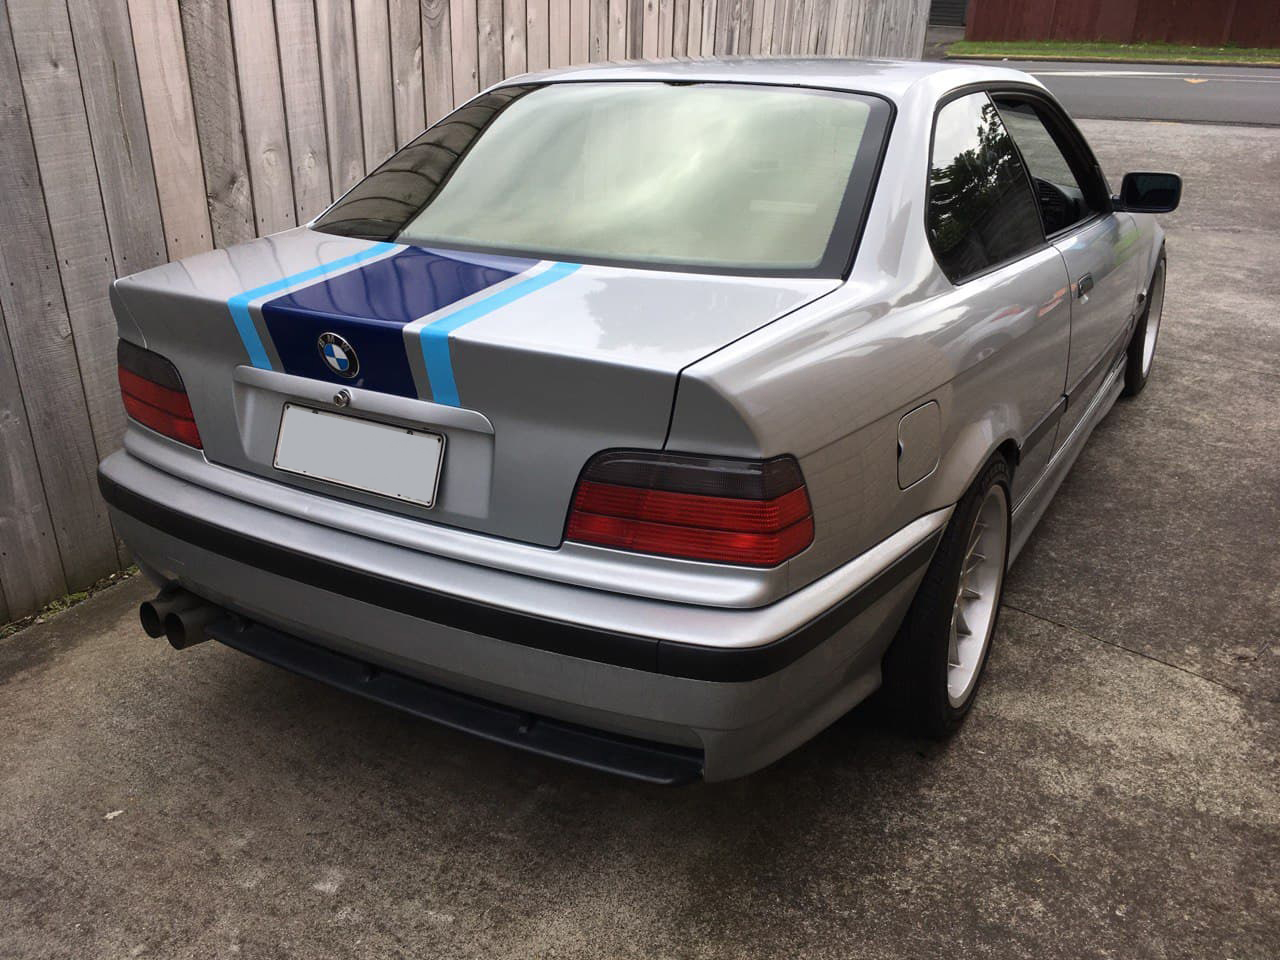 BMW E36 328i With Racing Stripes